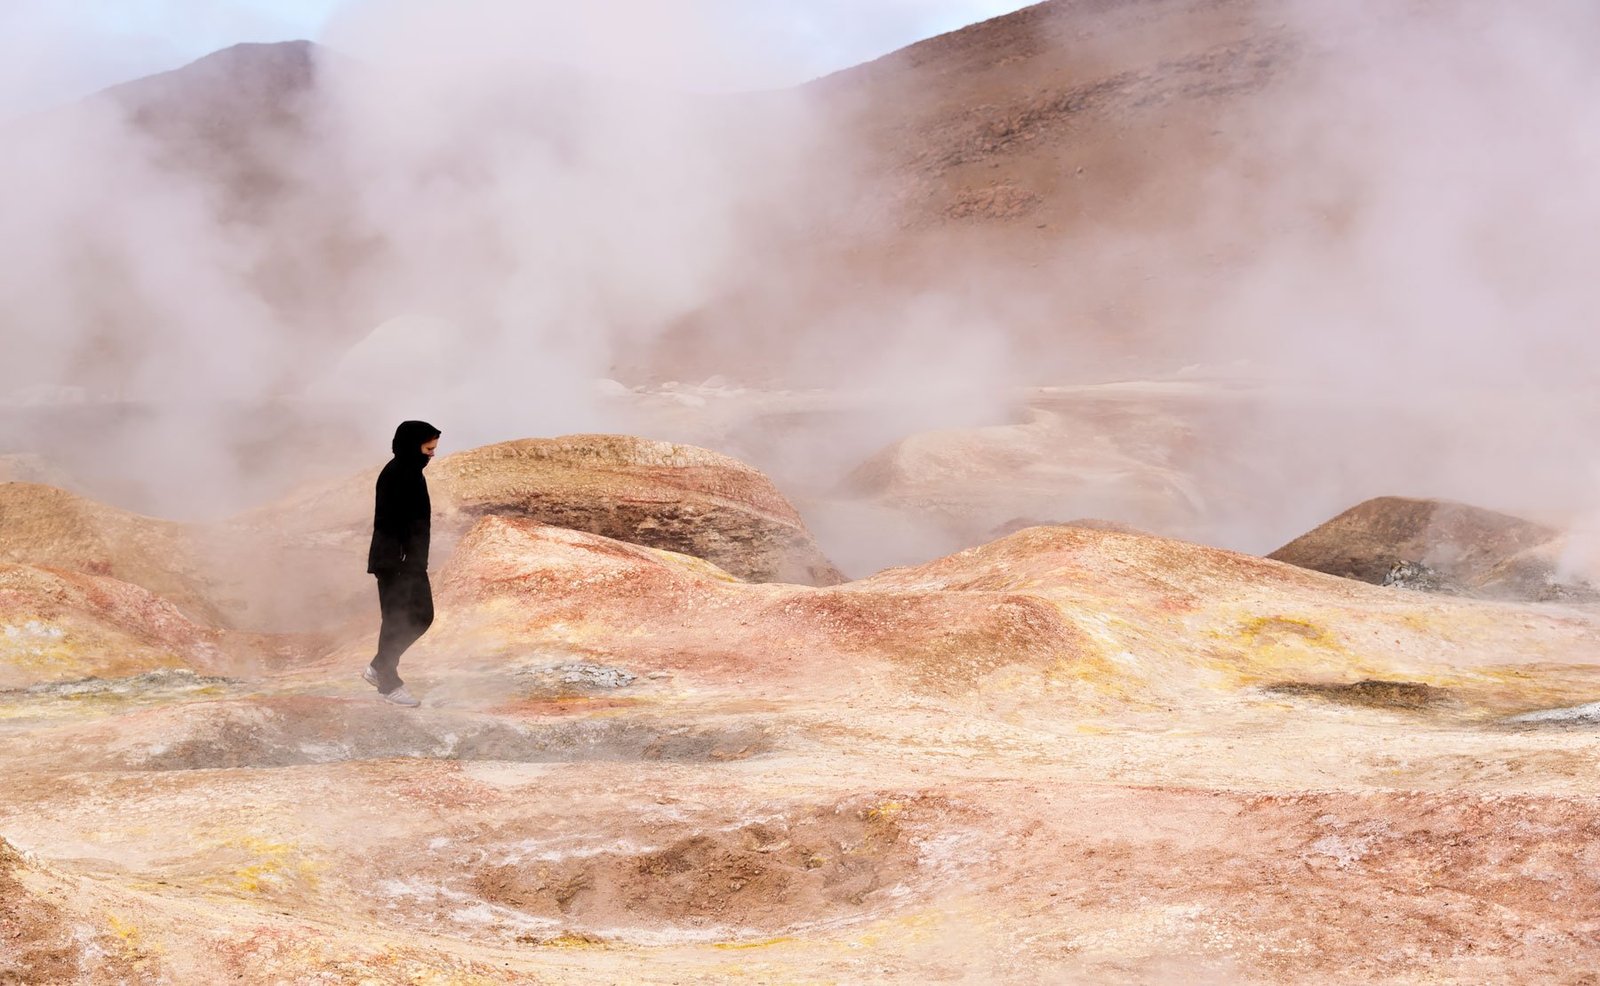 Geysers of Sol de Mañana - Salar de Uyuni: 5 Unforgettable Experiences on Bolivia's Salt Flats and Colored Lagoons